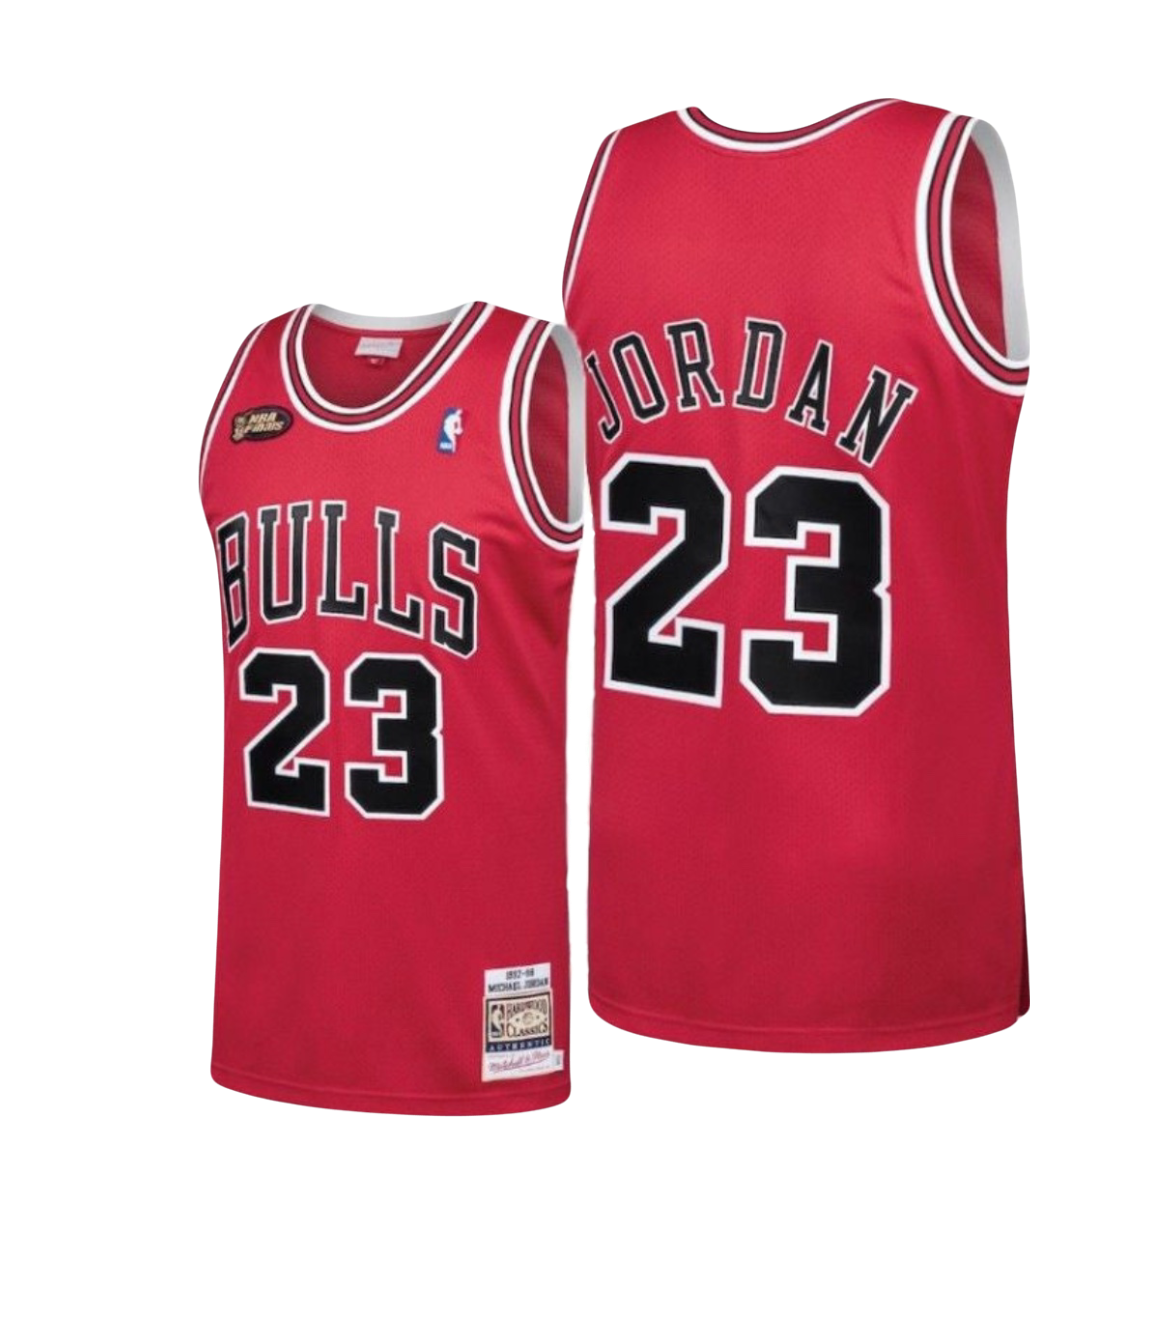 chicago bulls 97 98 jersey